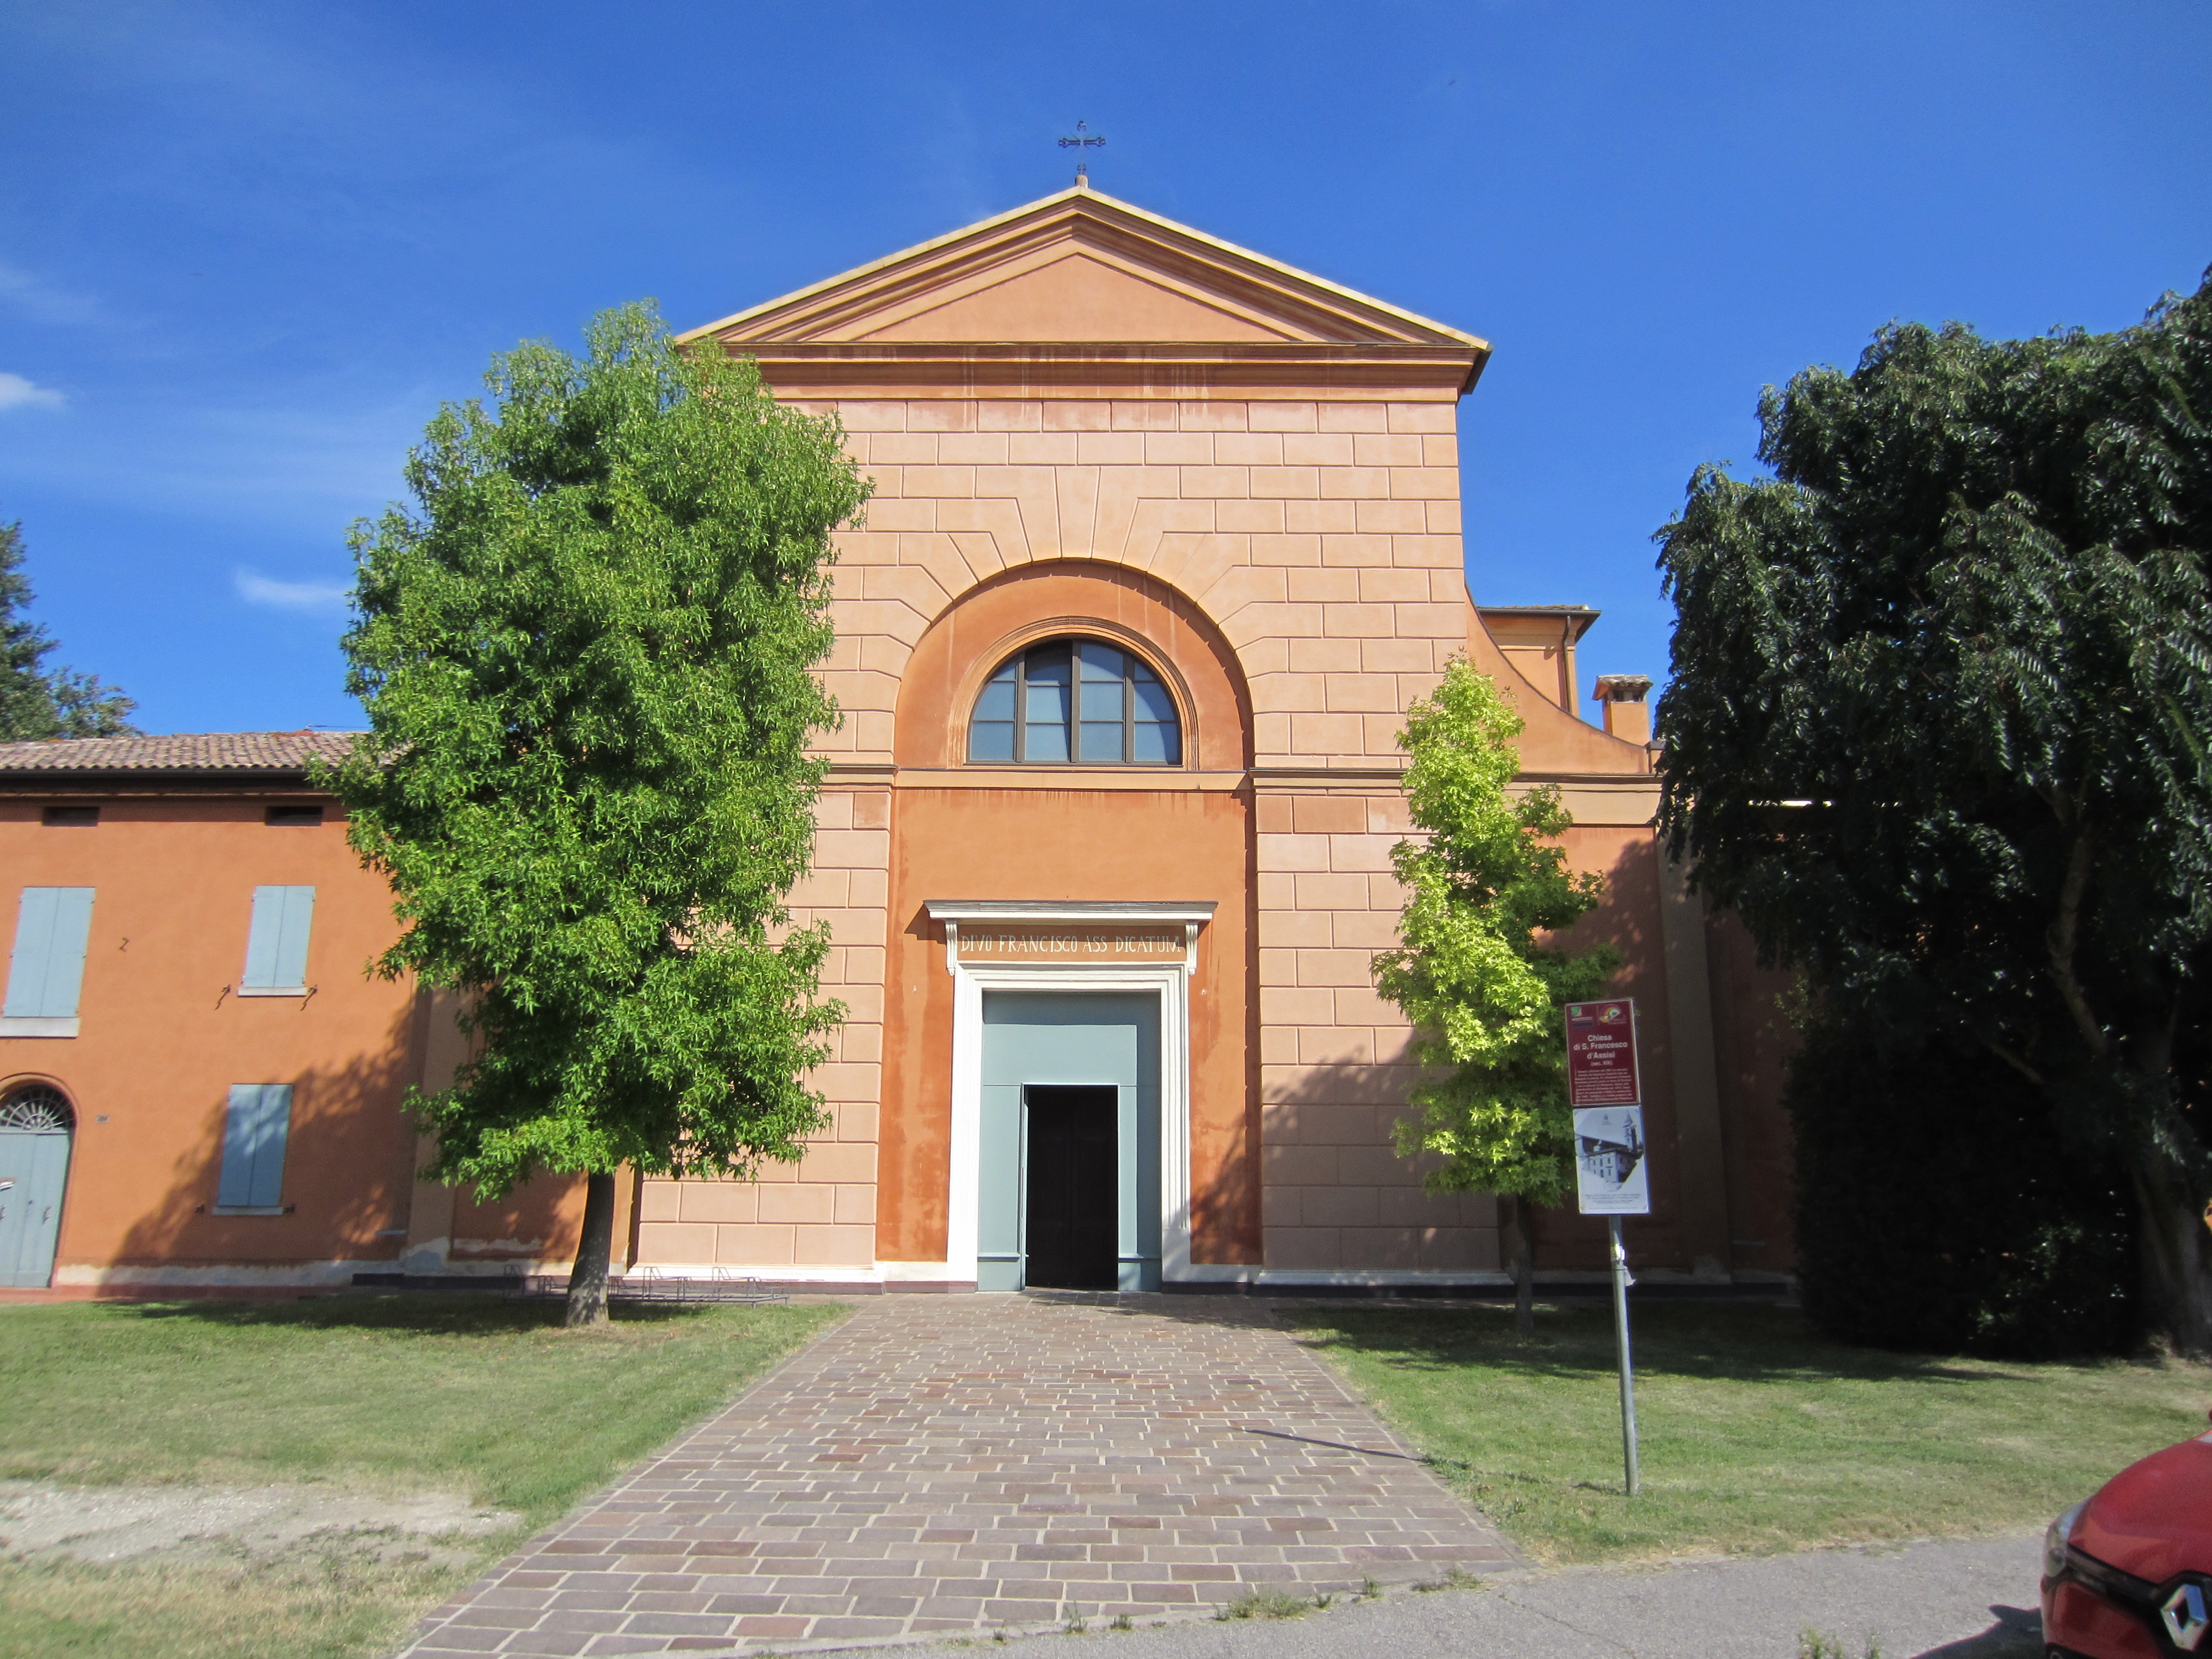 Chiesa di S. Francesco d'Assisi (chiesa) - Molinella (BO) 